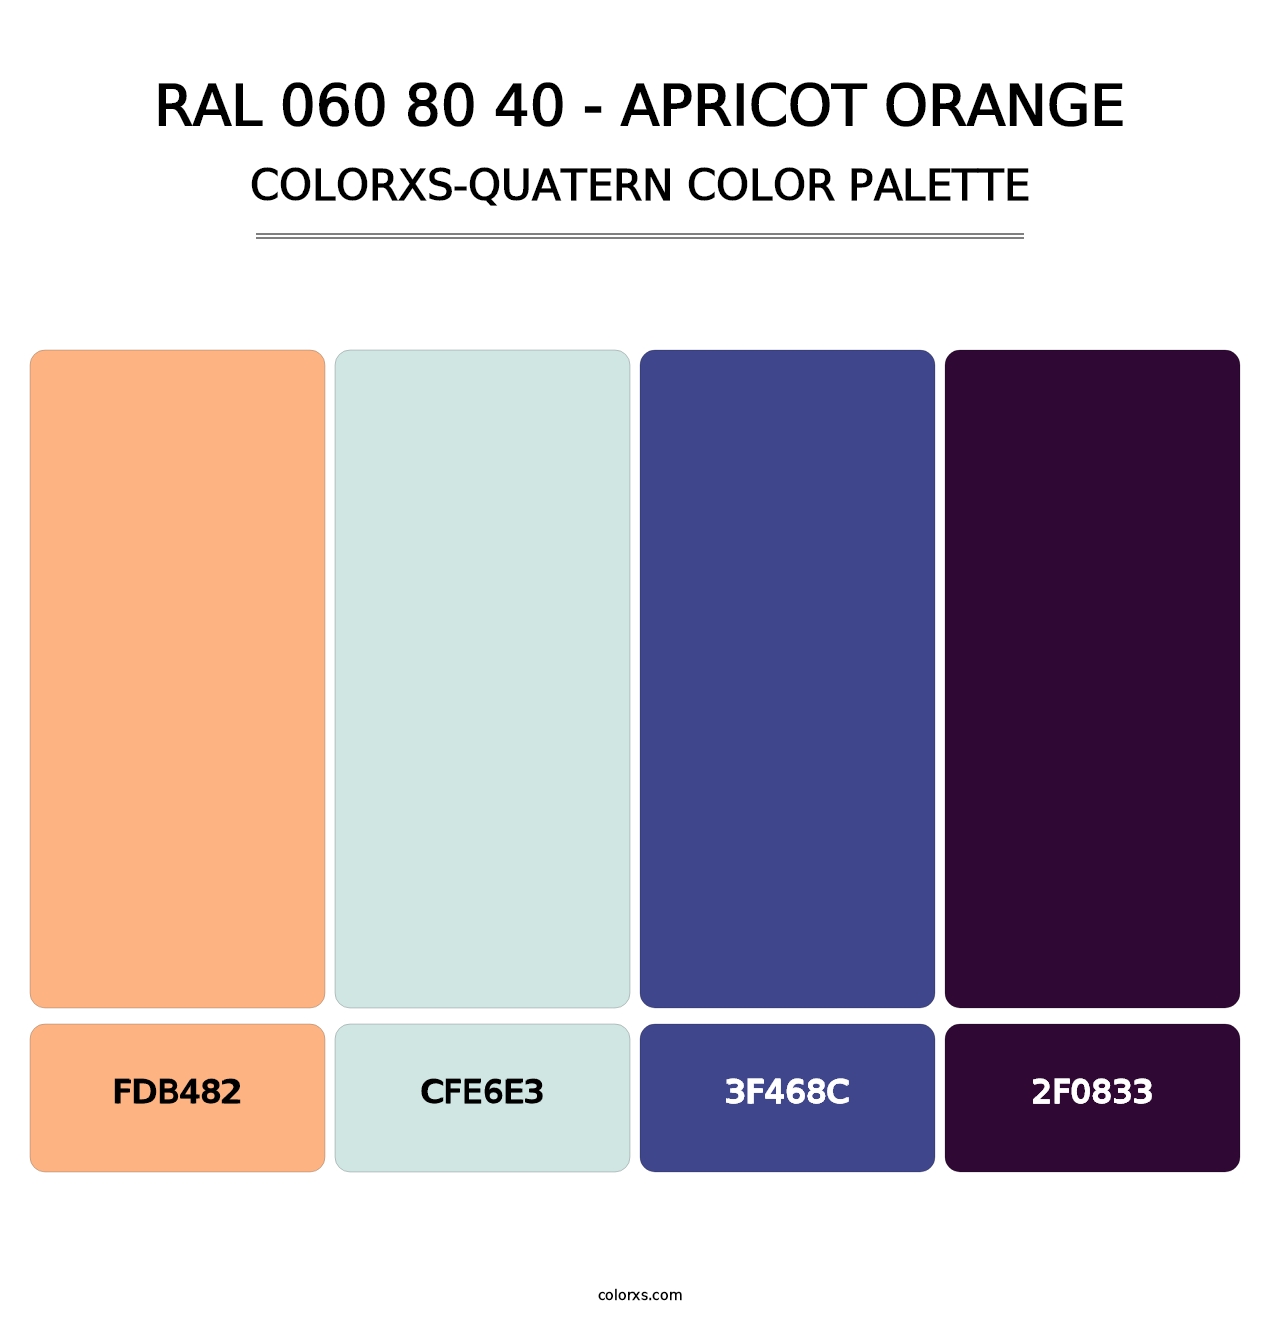 RAL 060 80 40 - Apricot Orange - Colorxs Quatern Palette